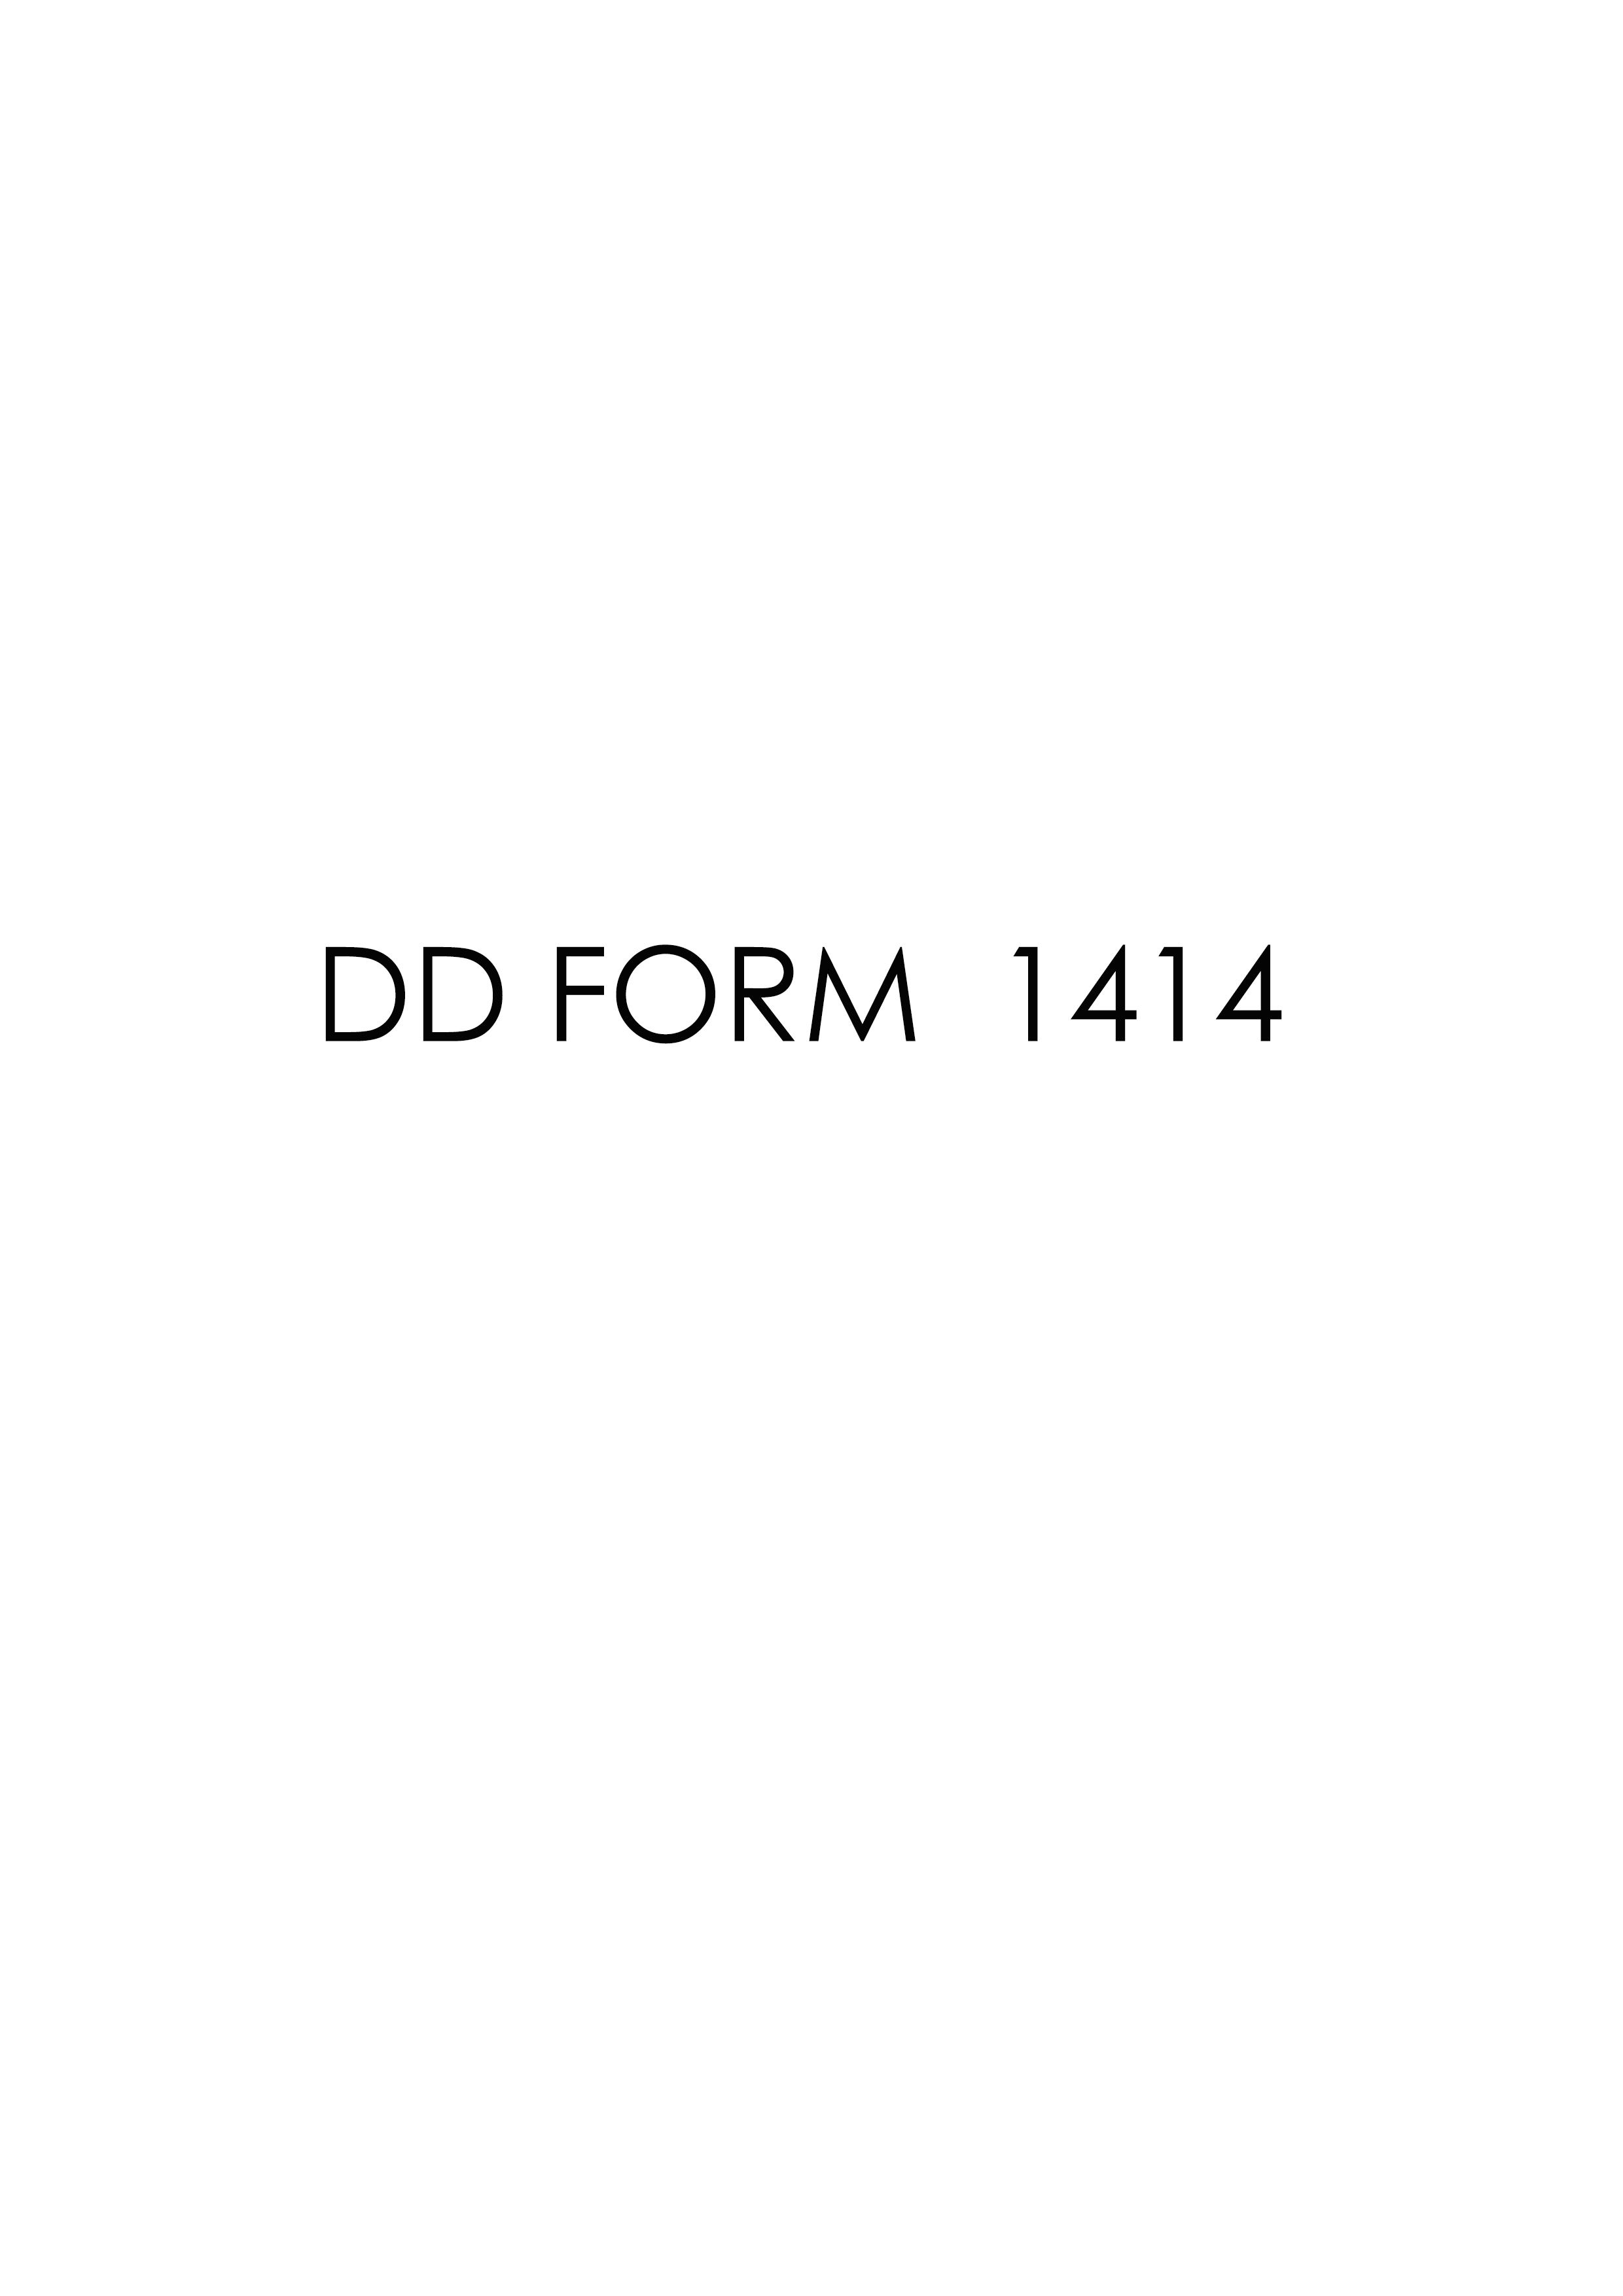 Download dd 1414 Form